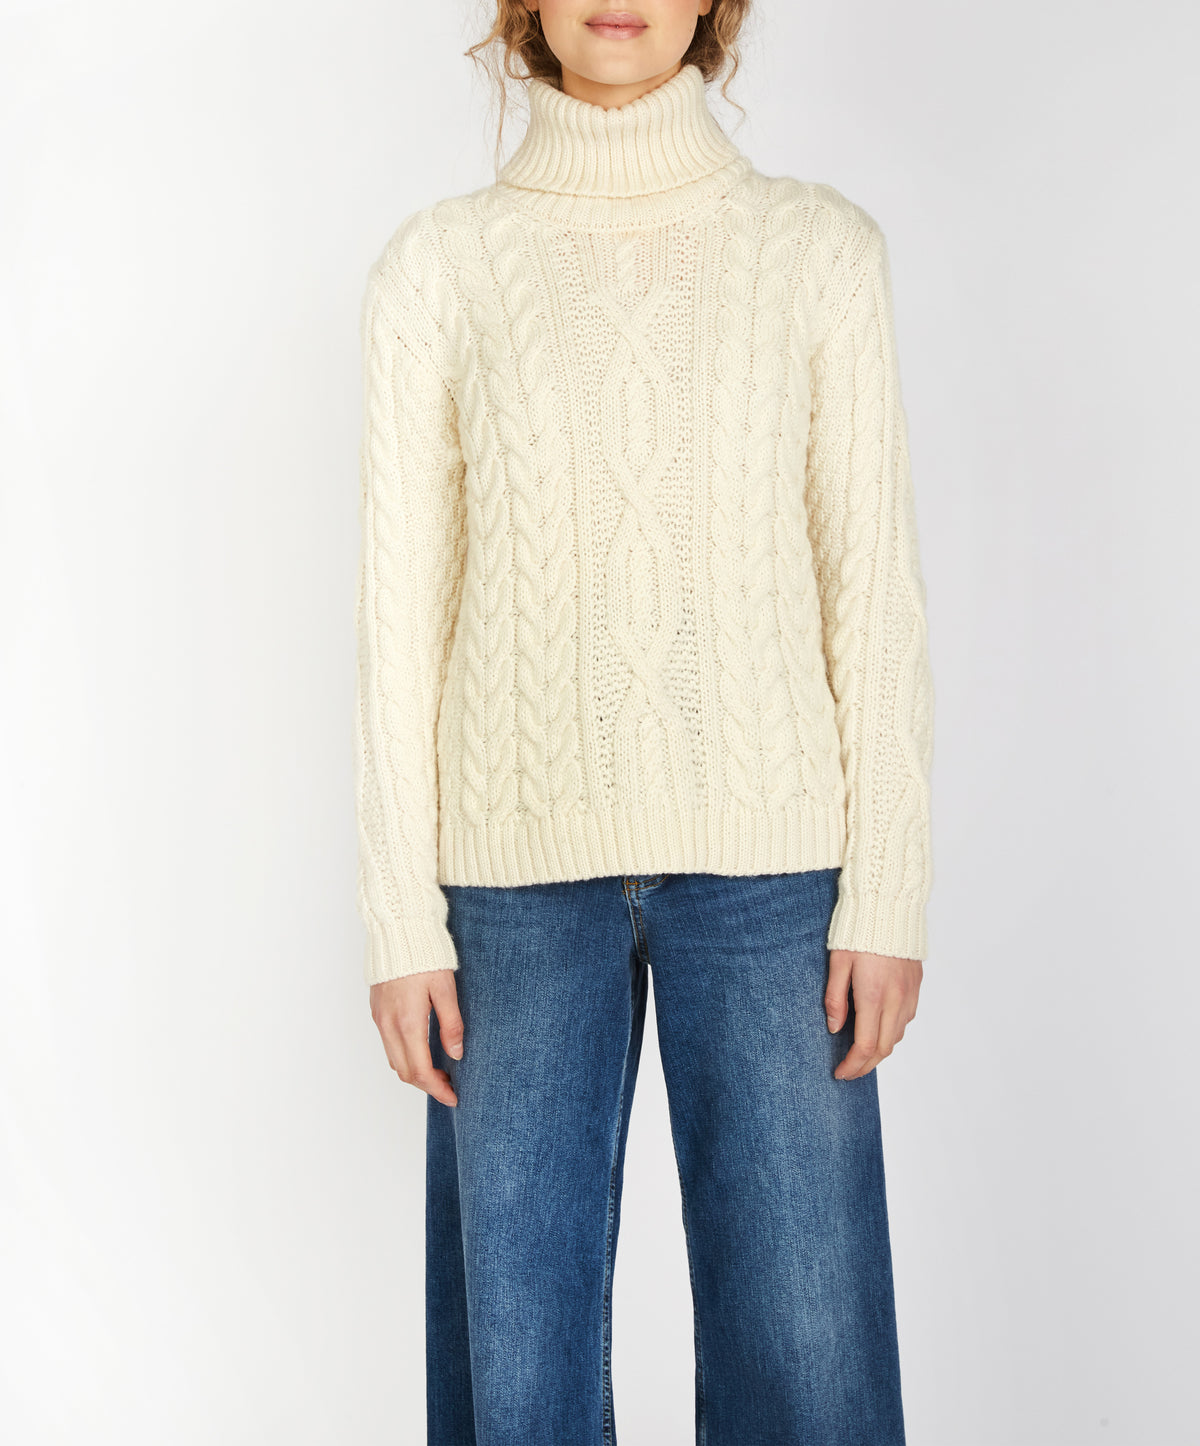 IrelandsEye Knitwear Juniper Aran Polo Neck Sweater in Natural